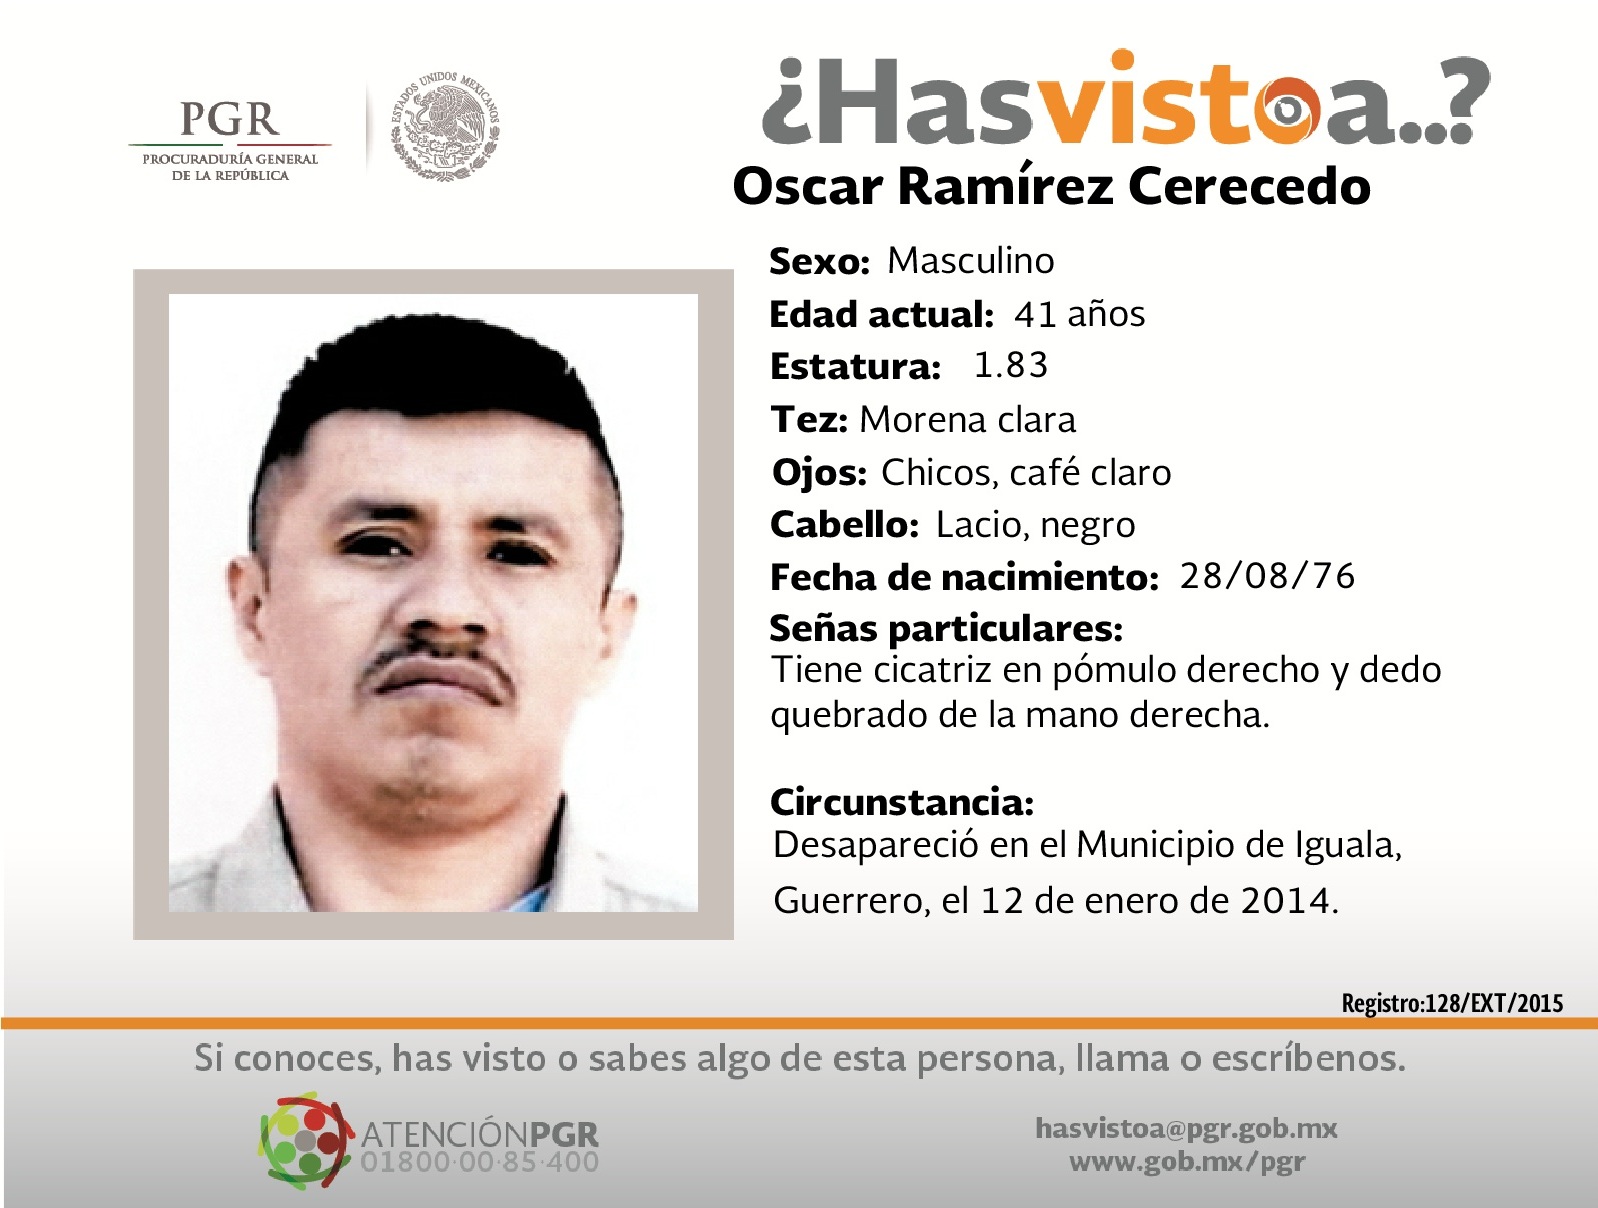 #SeBusca Ayúdanos a localizar a Oscar Ramírez